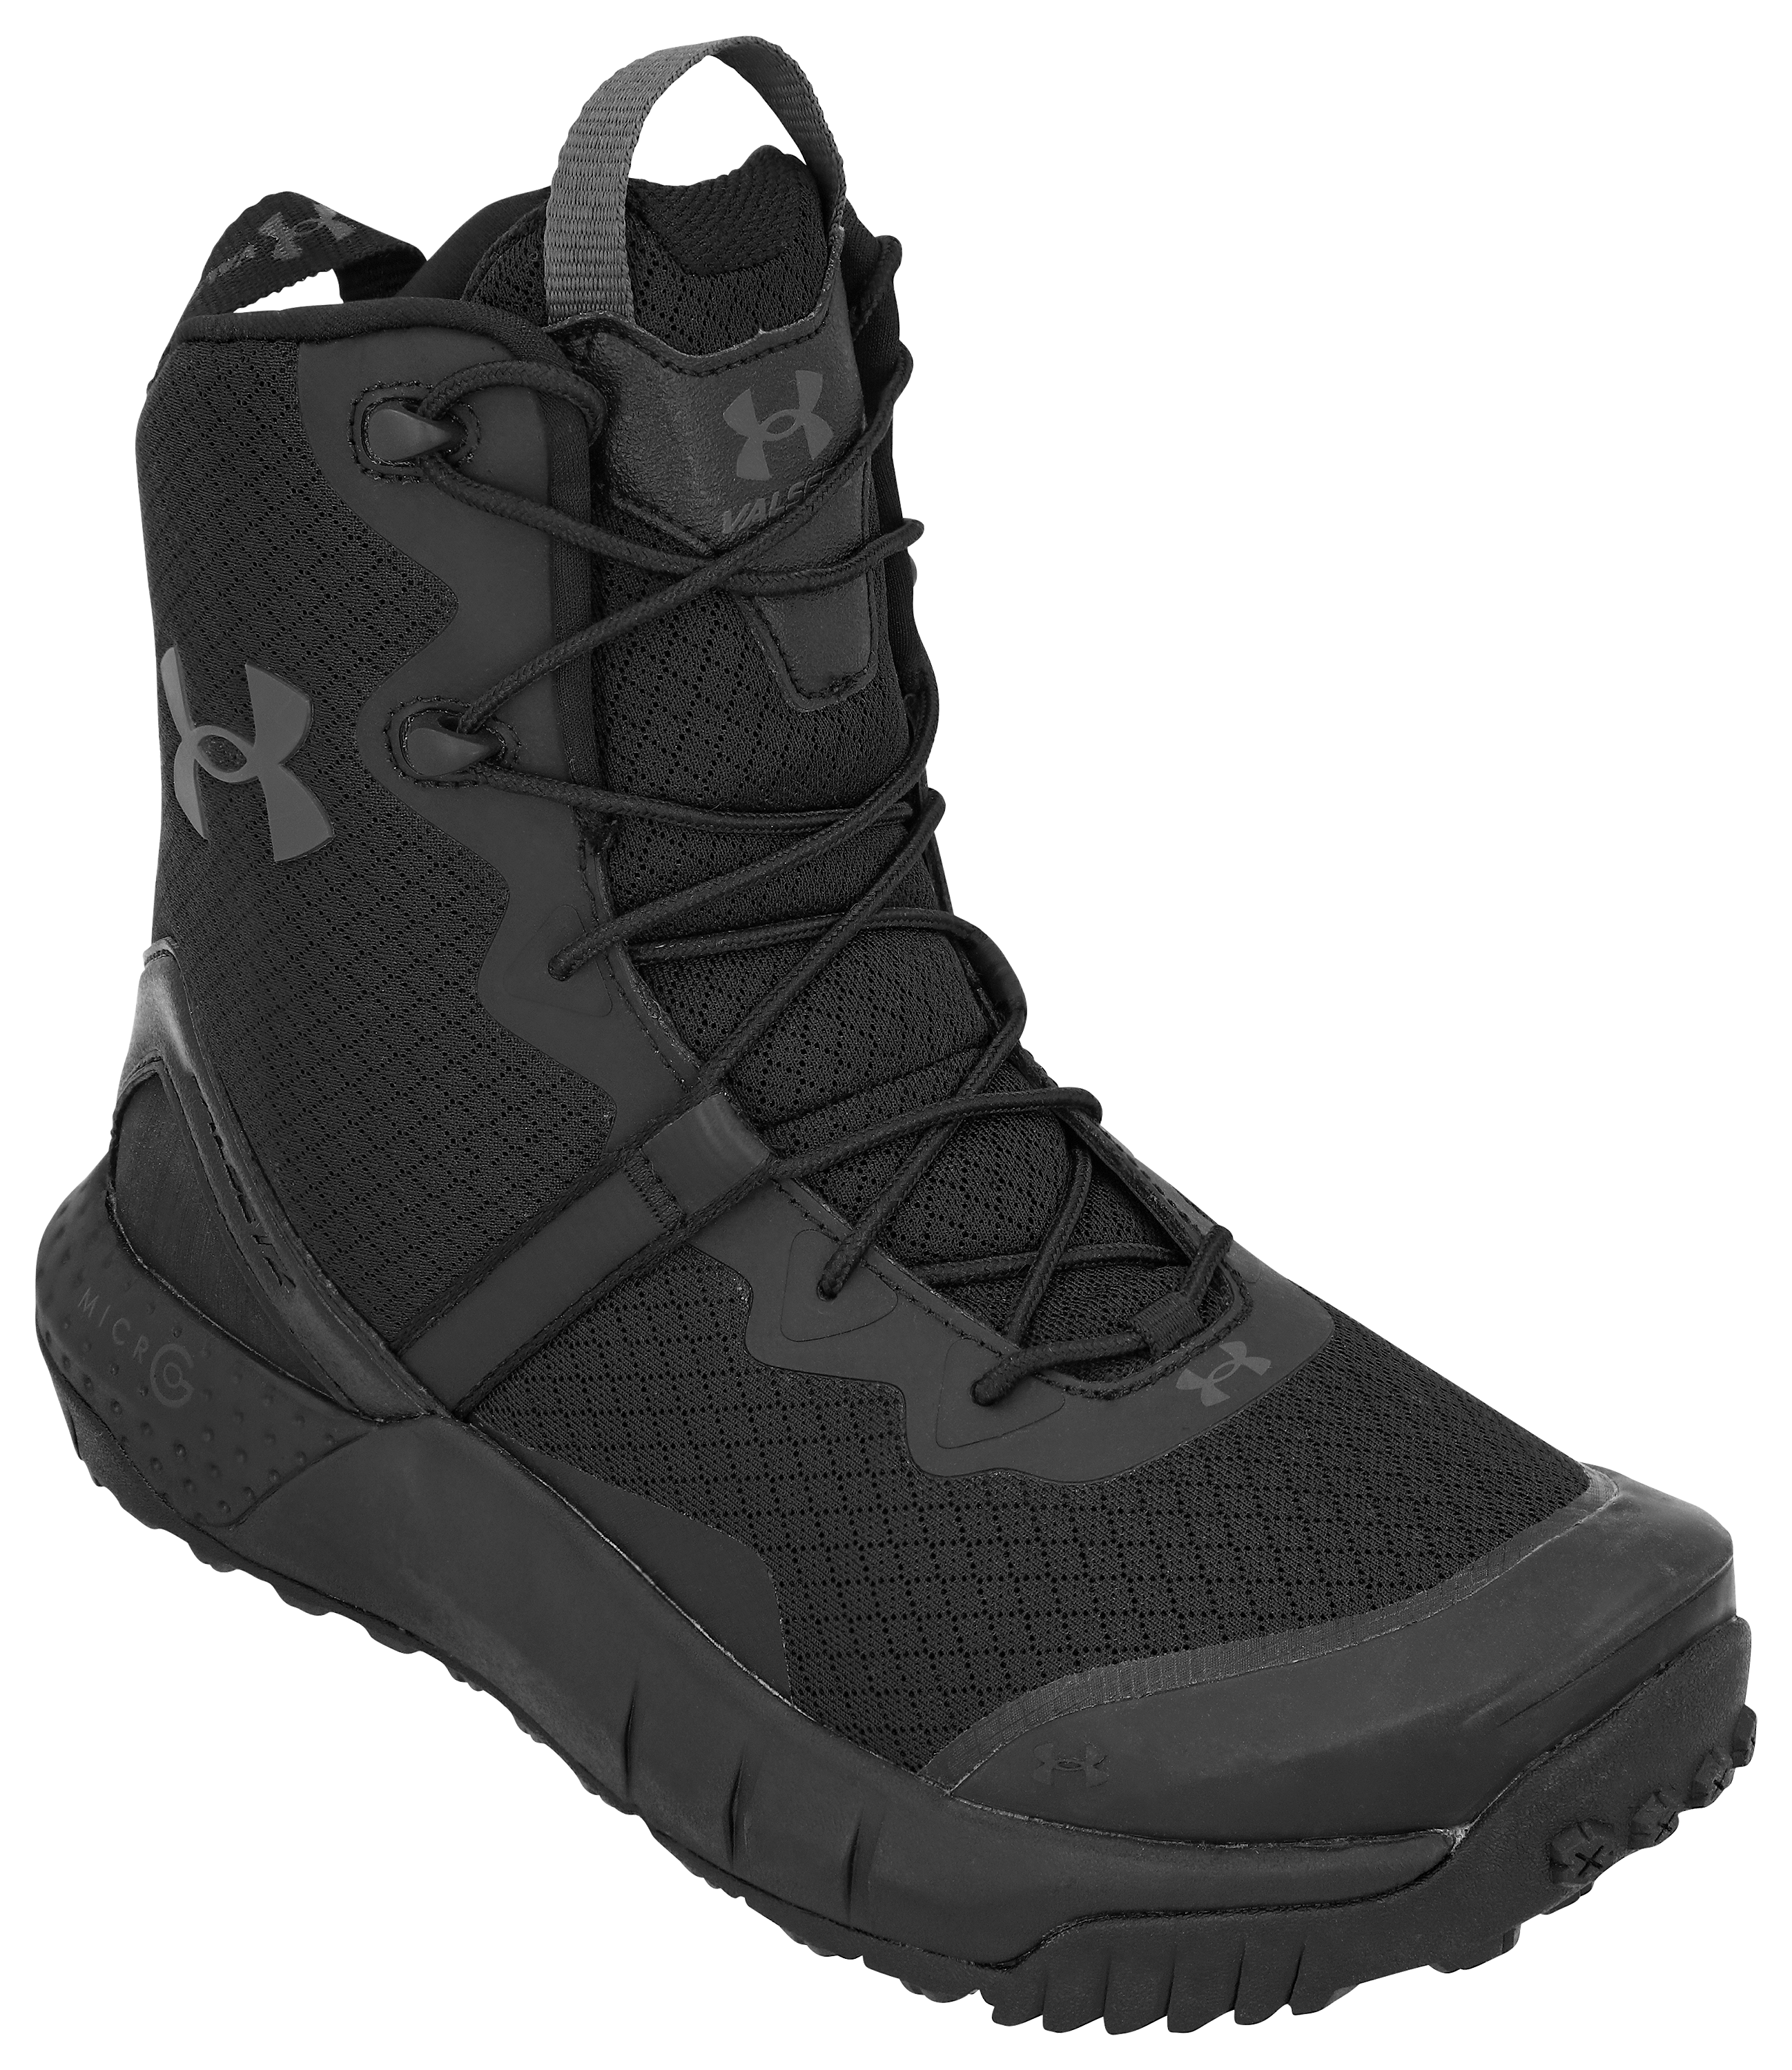 Under Armour Micro G Valsetz Side Zip Tactical Boots for Men - Black - 10 5M